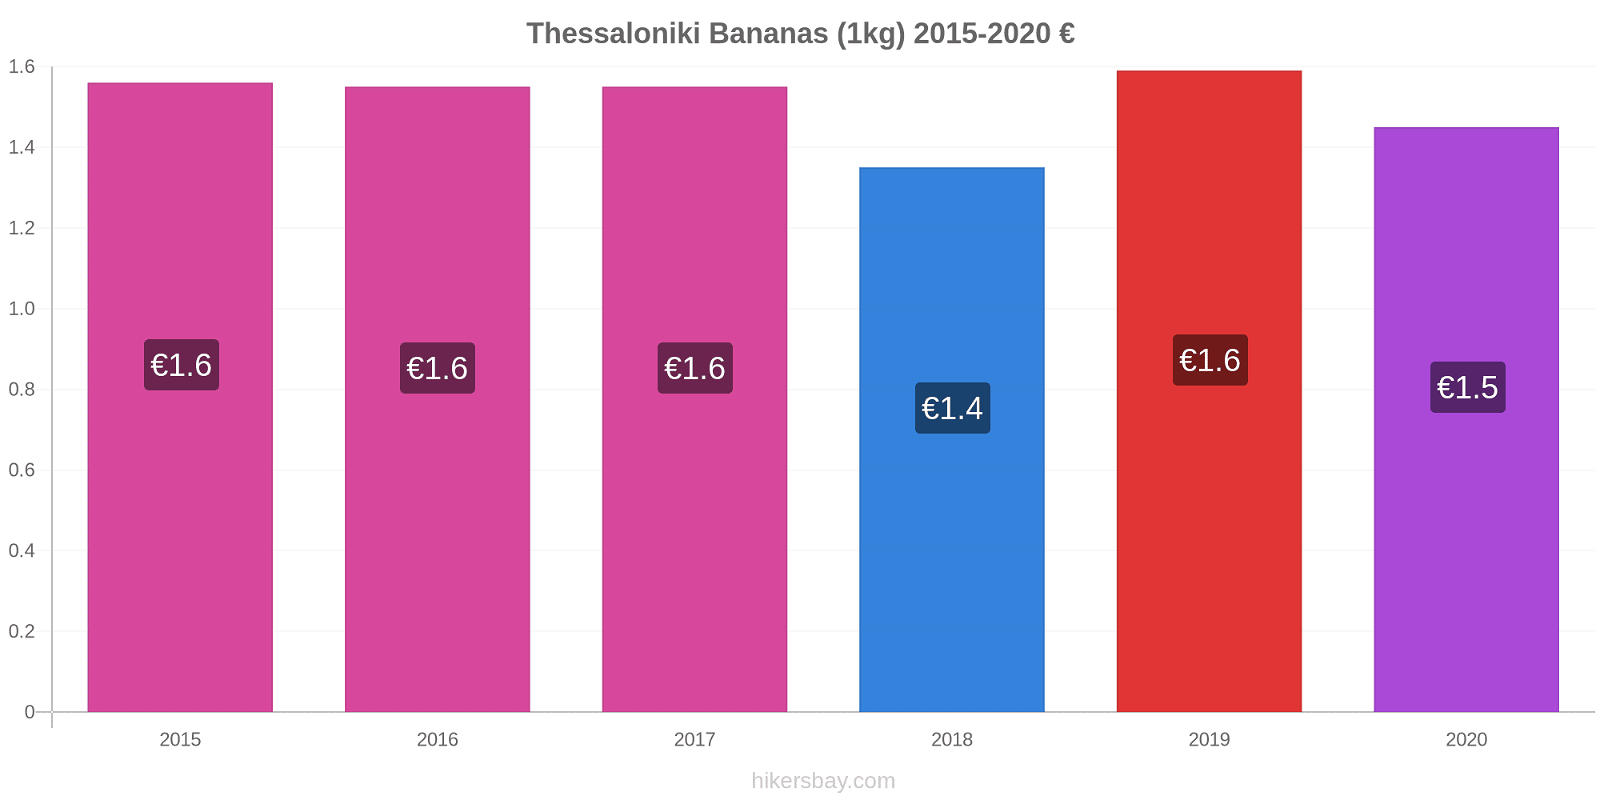 Thessaloniki price changes Bananas (1kg) hikersbay.com